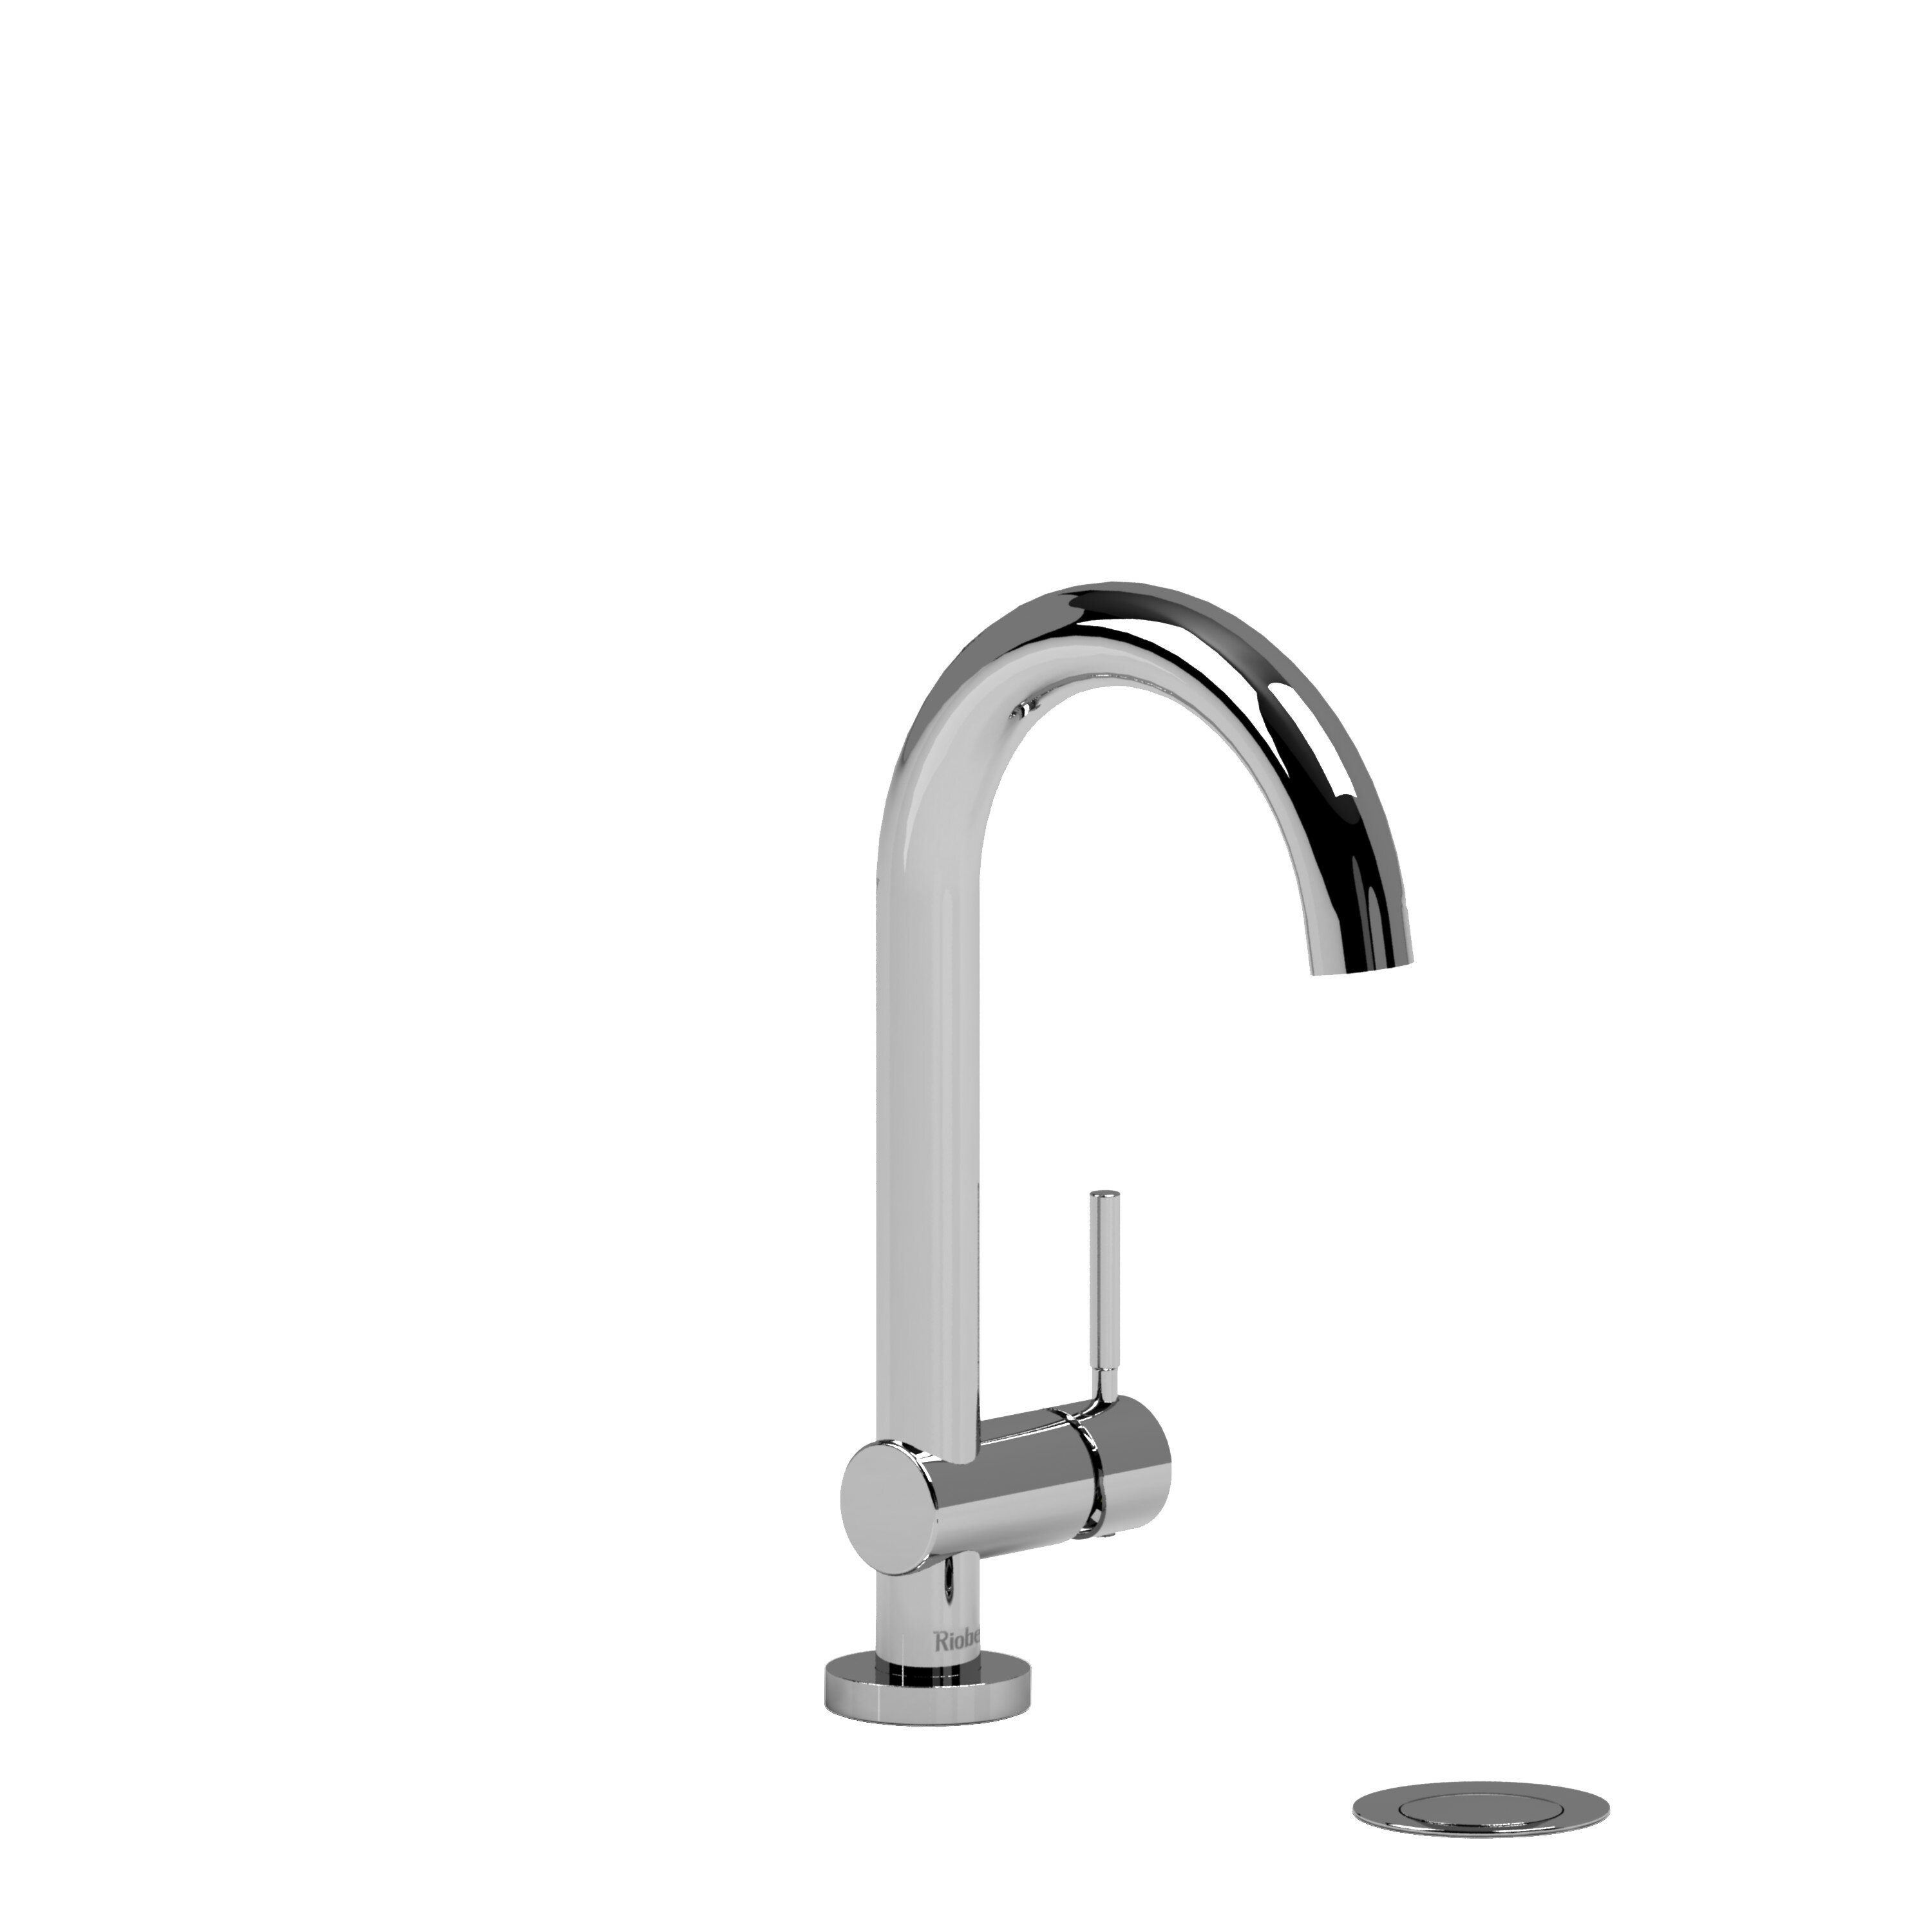 Riobel Riu Single Hole Bathroom Faucet With Drain Assembly Wayfair